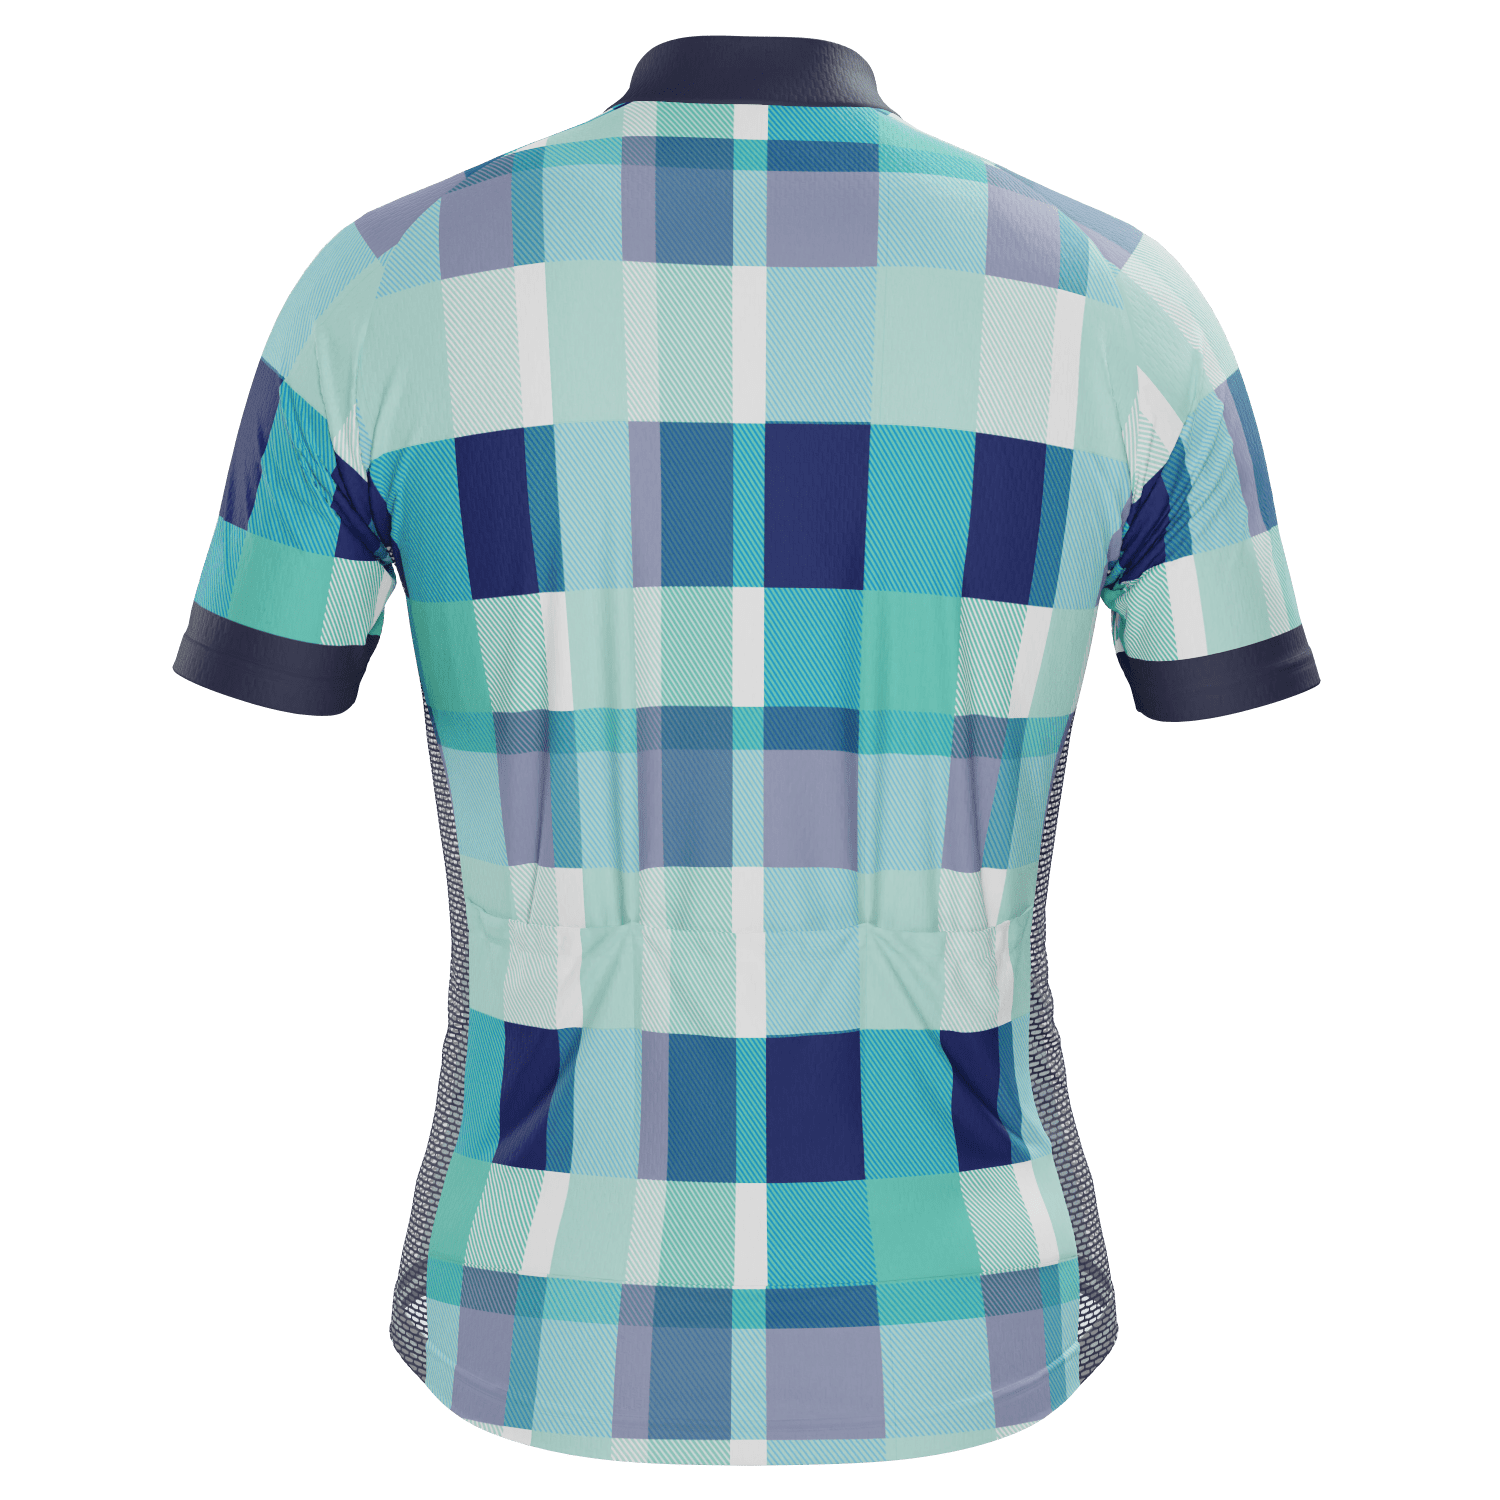 Men's Classic Tartan Short Sleeve Cycling Jersey